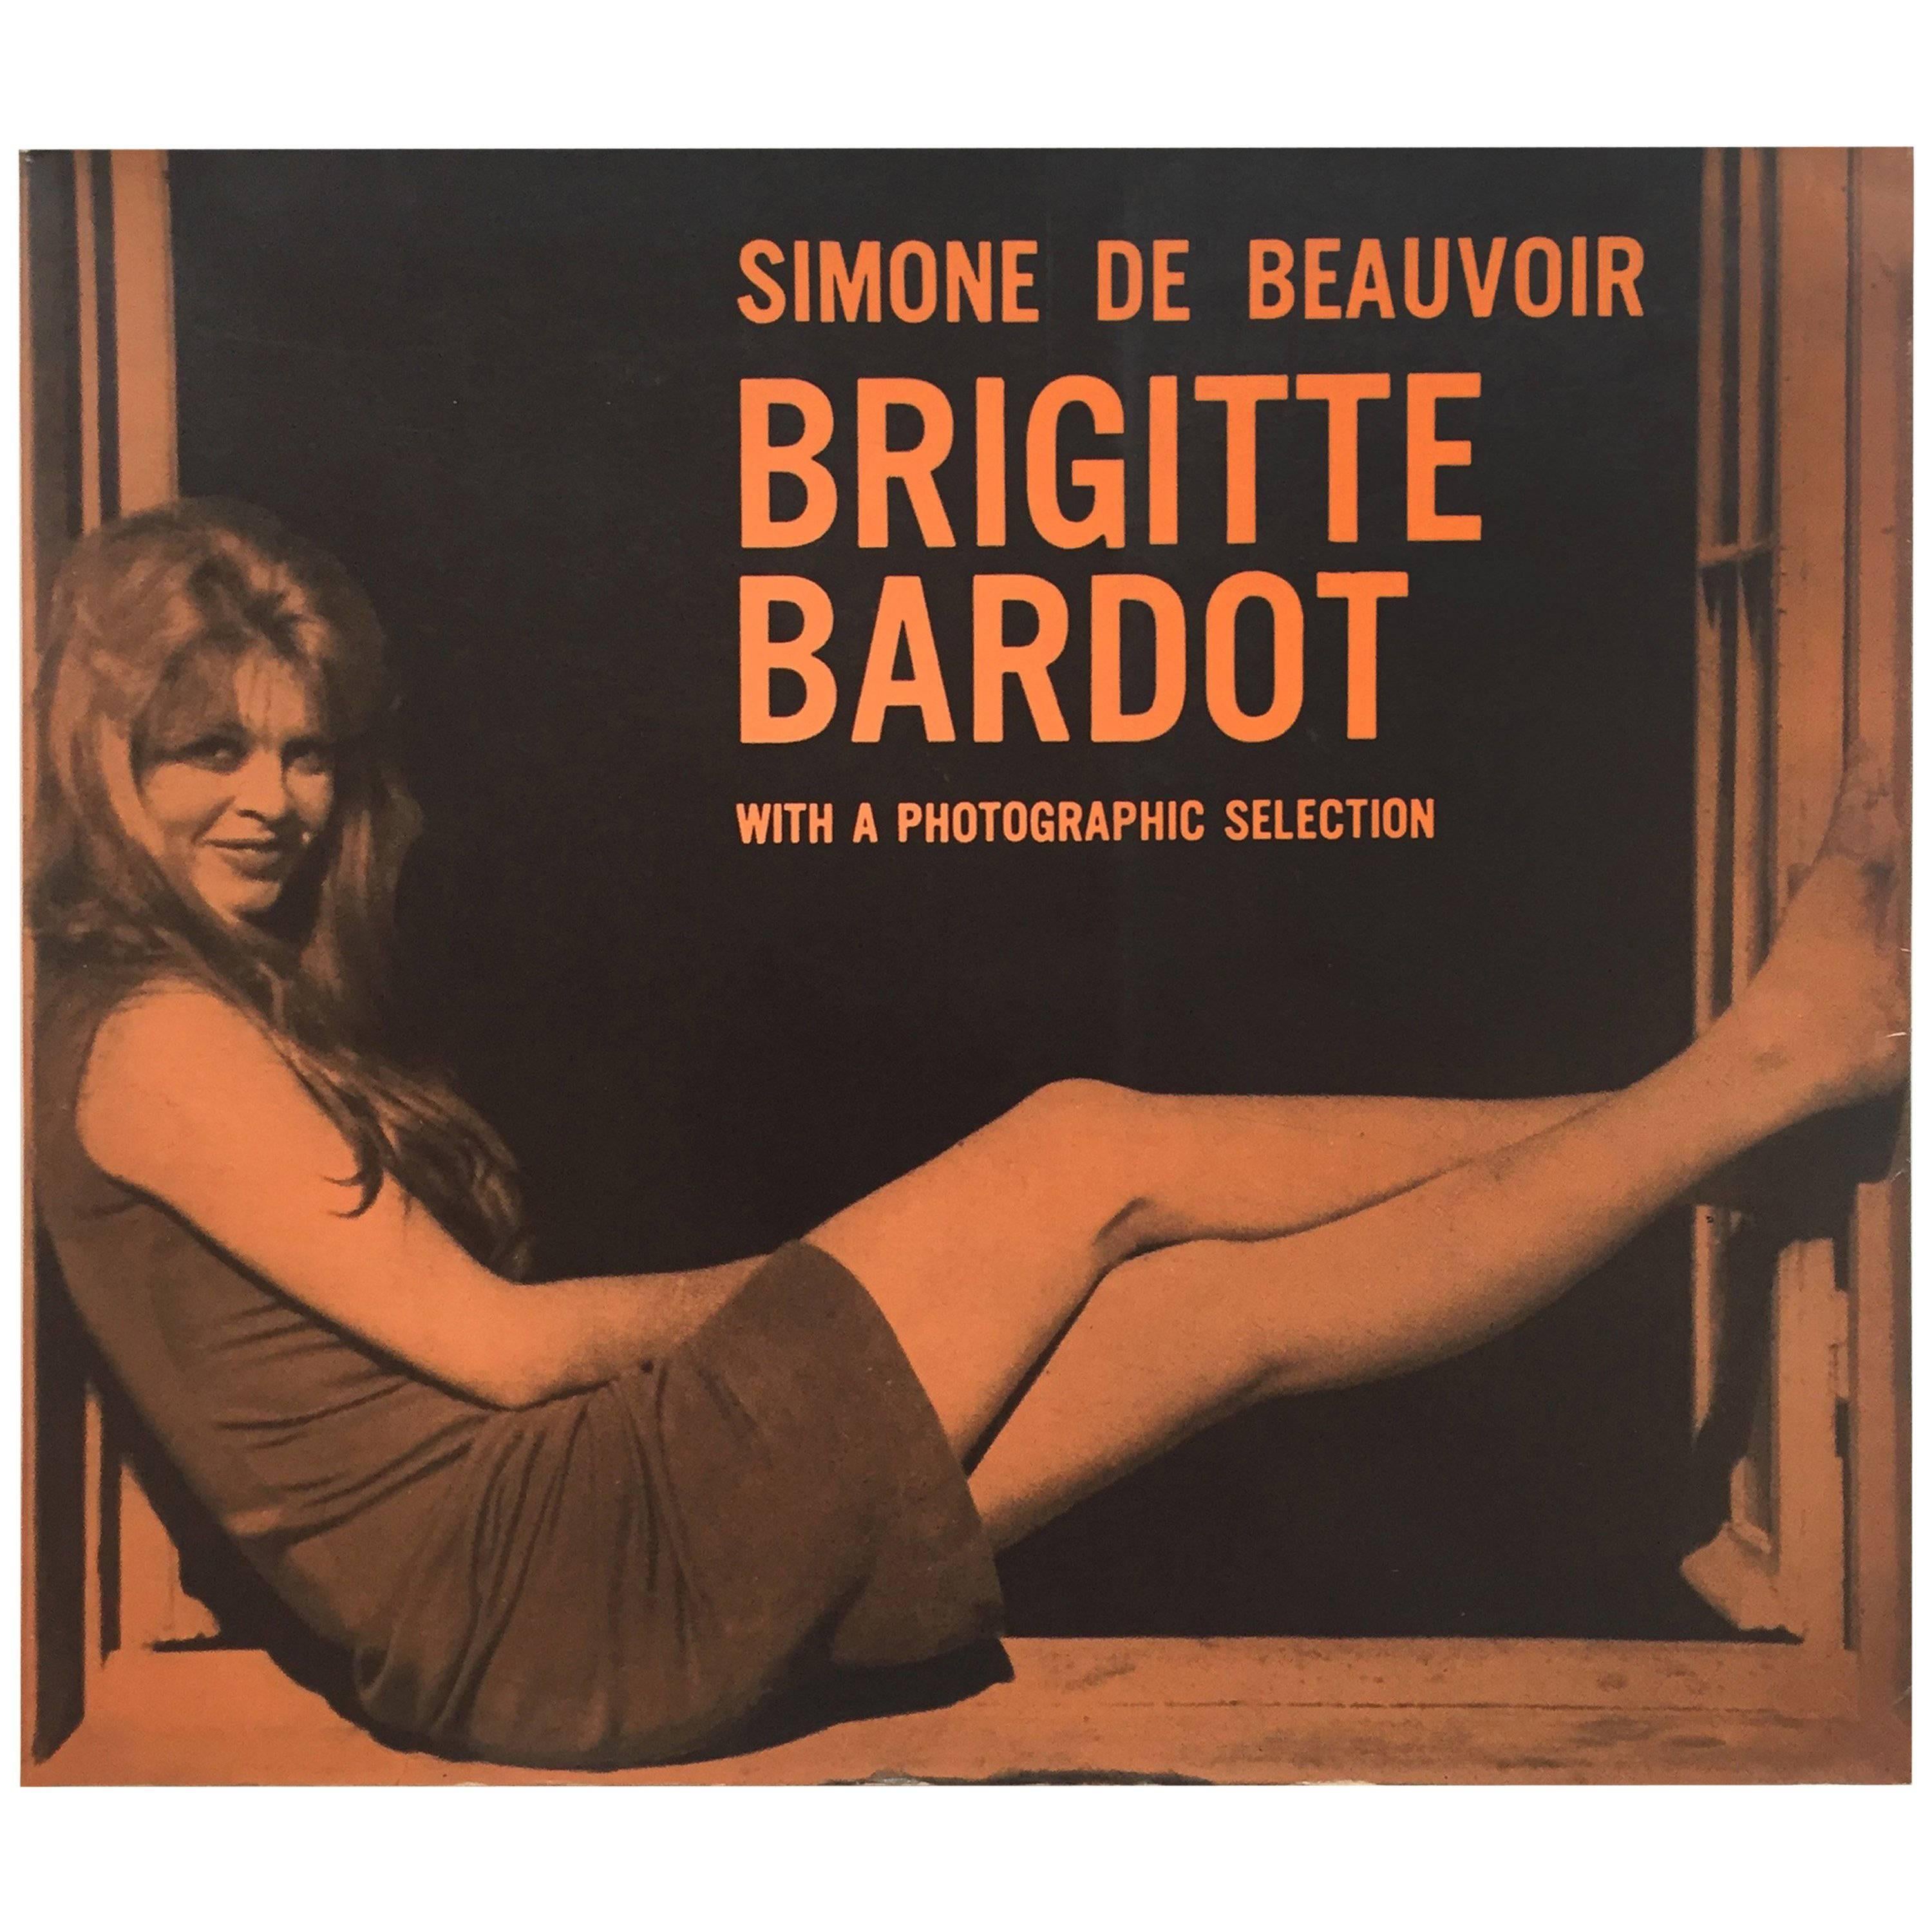 "Simone de Beauvoir, Brigitte Bardot" Book, 1960